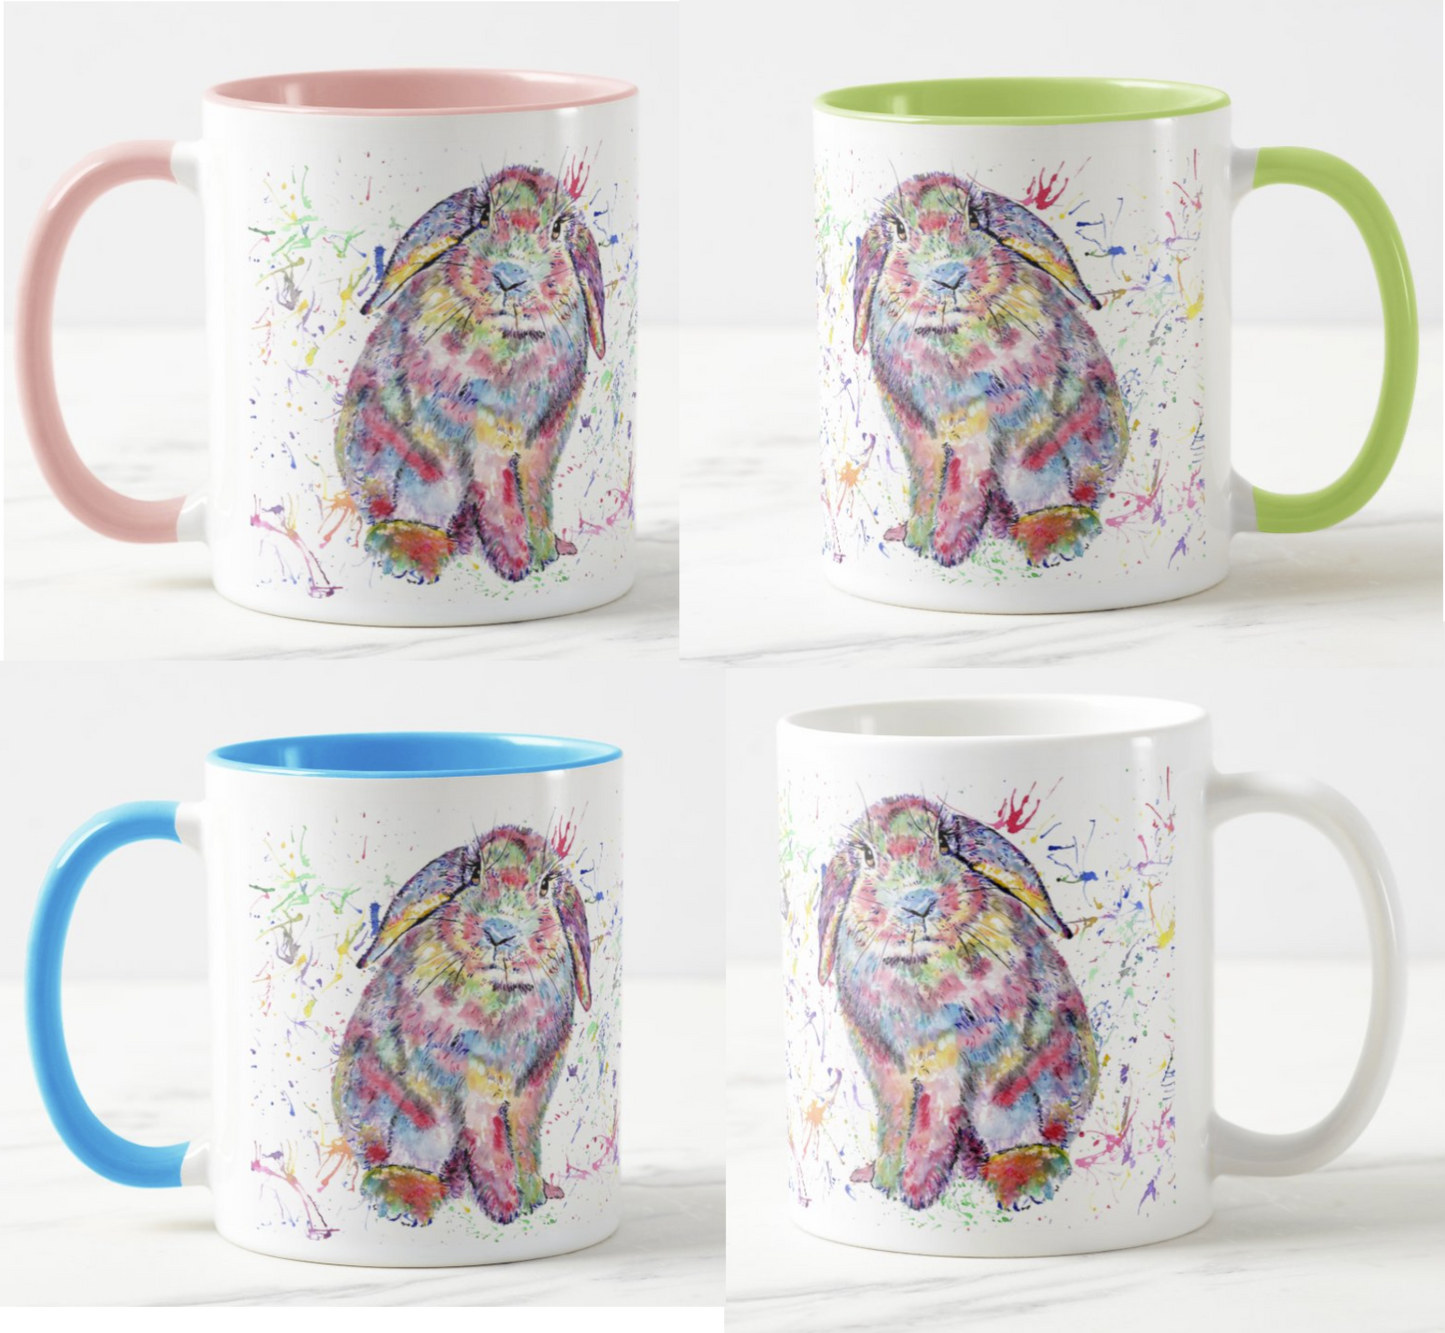 Lop Rabbit Bunny Eared Wildlife Animals Watercolour Rainbow Art Coloured Mug Cup